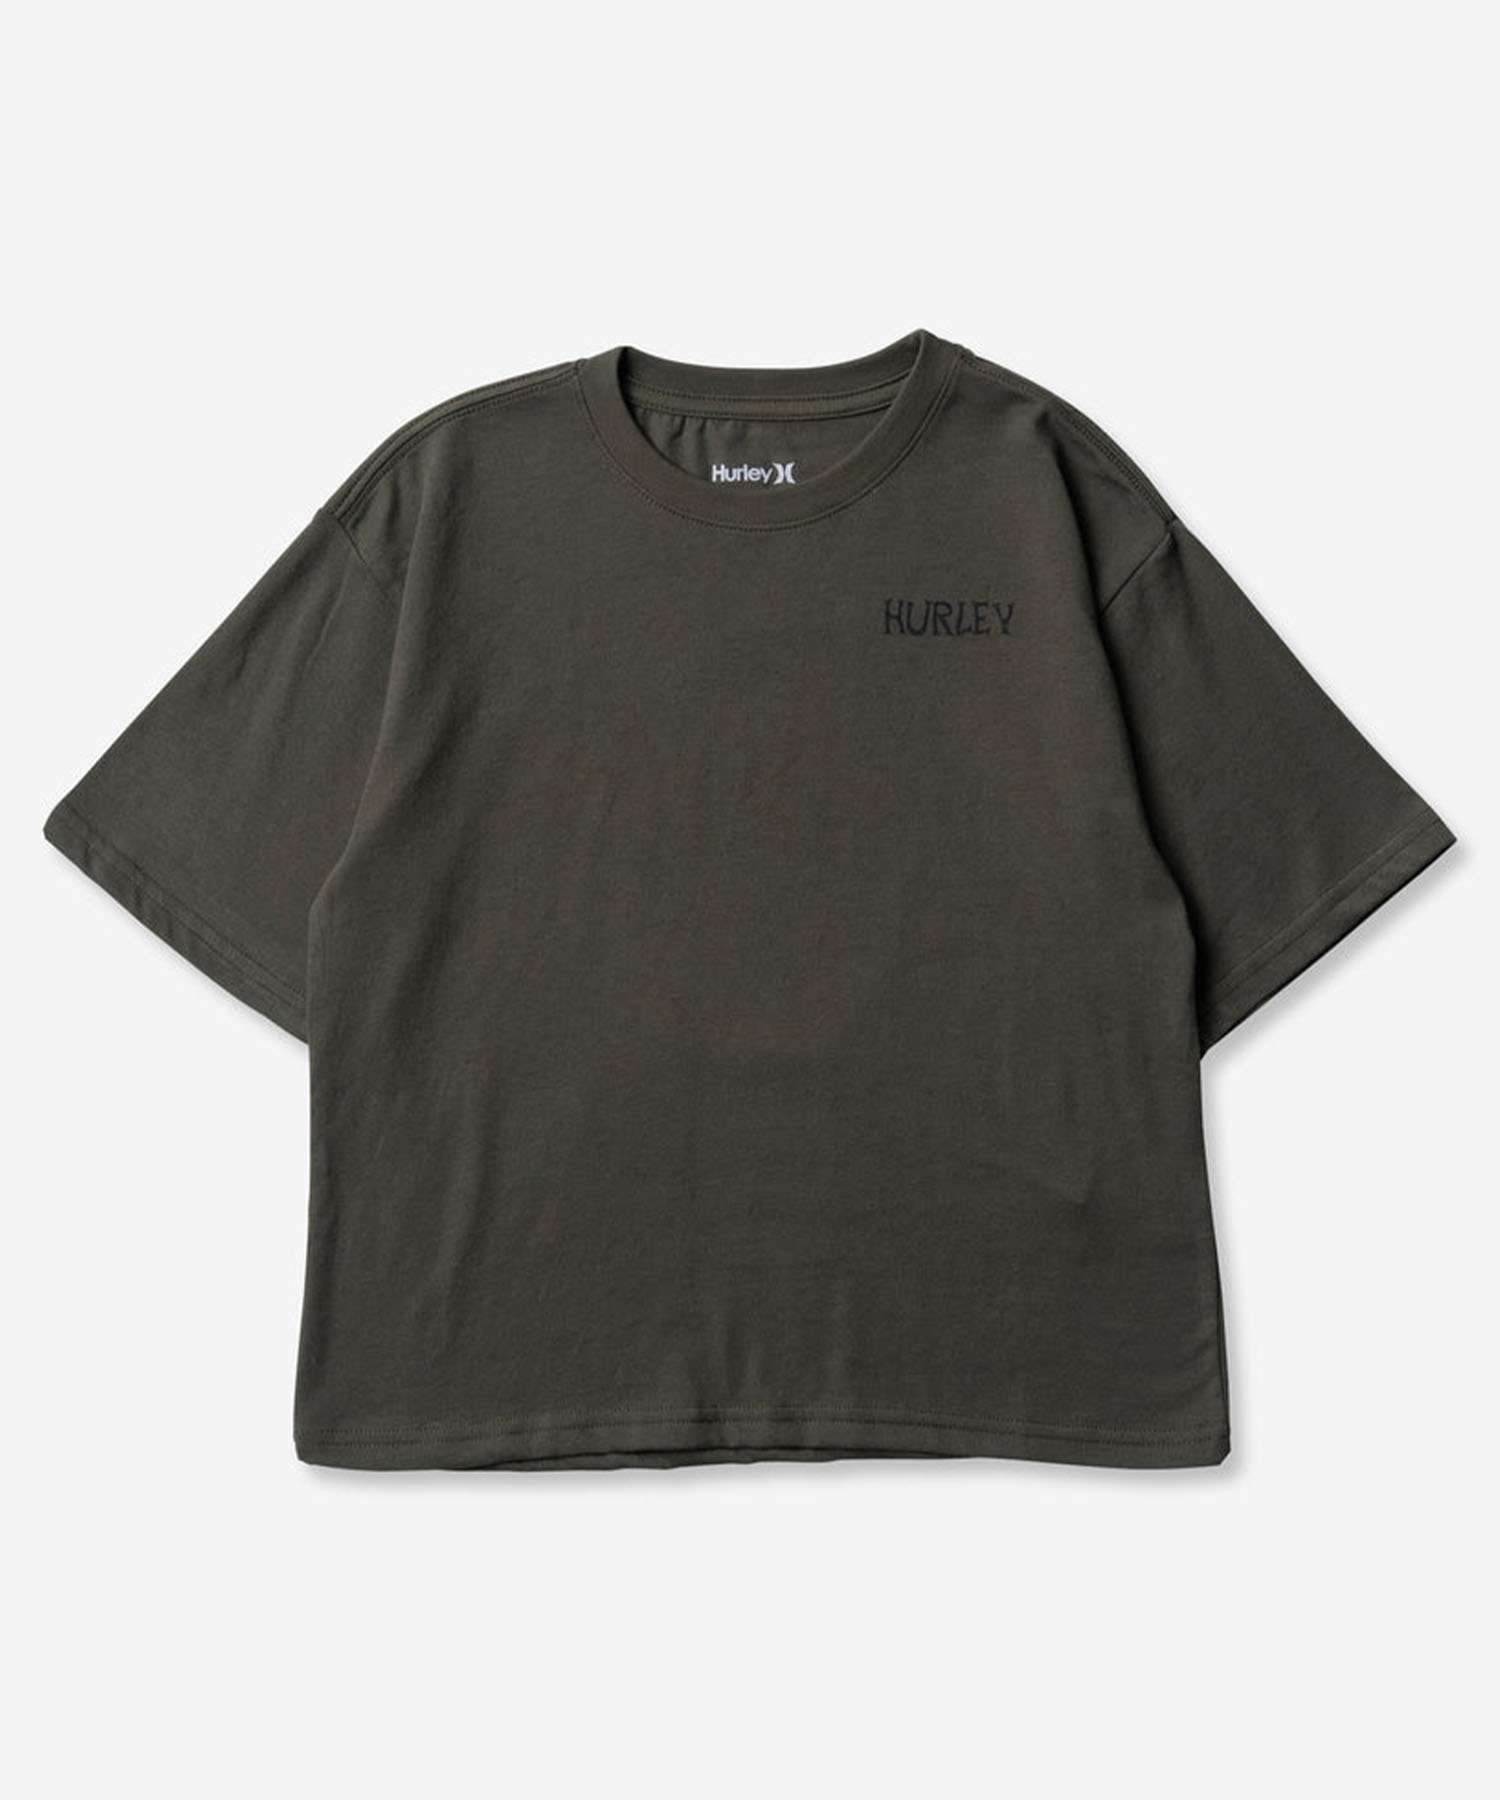 Hurley ハーレー BOYS OVERSIZE PIZZA SHORT SLEEVE TEE キッズ 半袖 Tシャツ BSS2431005(OLV-130cm)